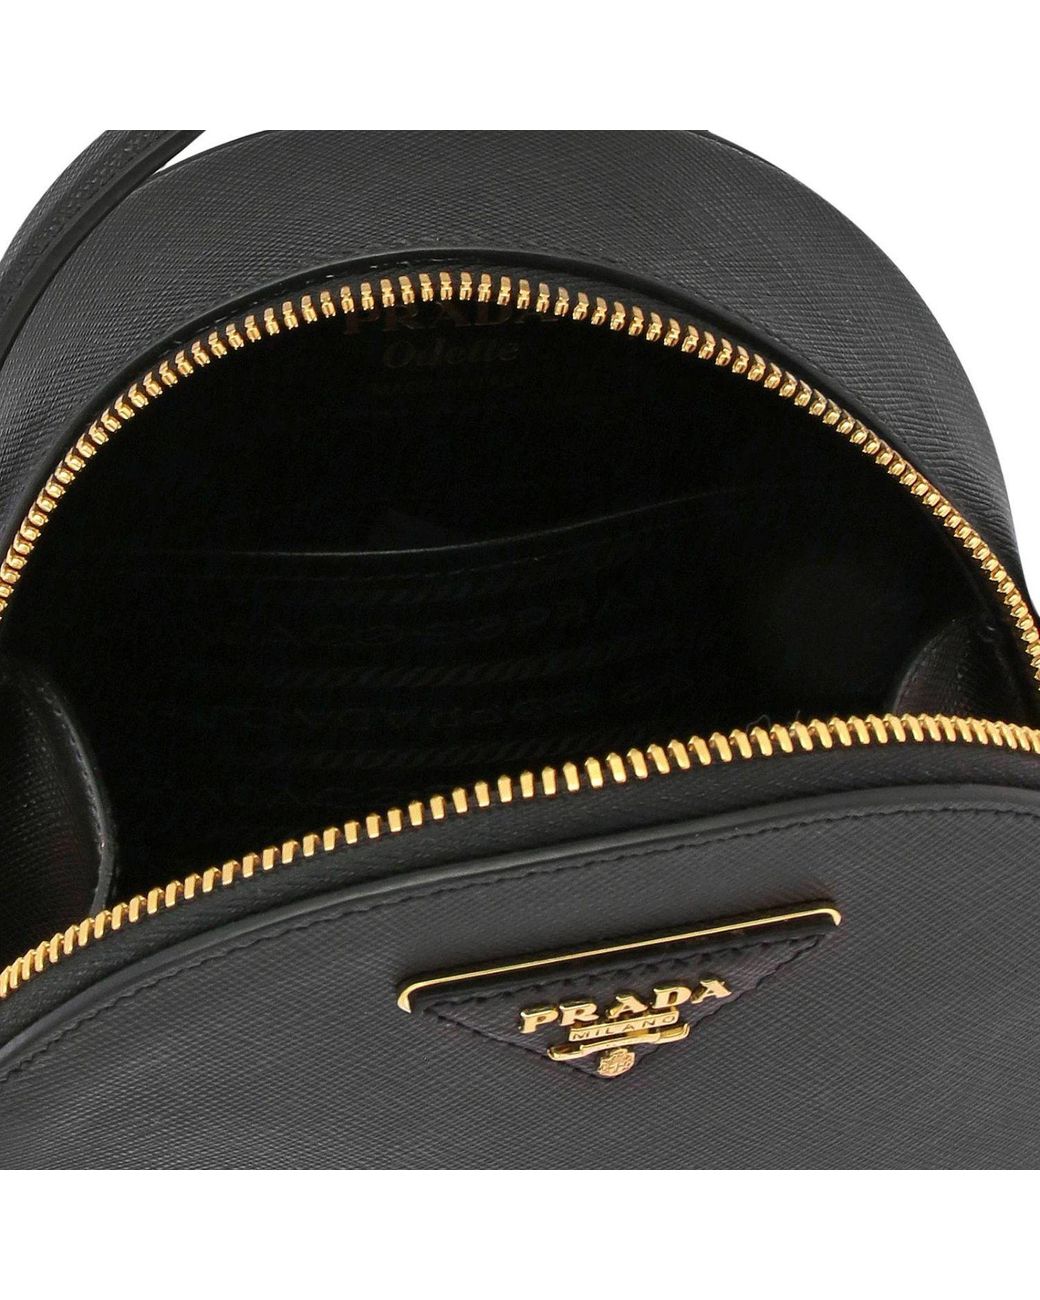 PRADA Saffiano Lux Mini Odette Backpack Black 979230